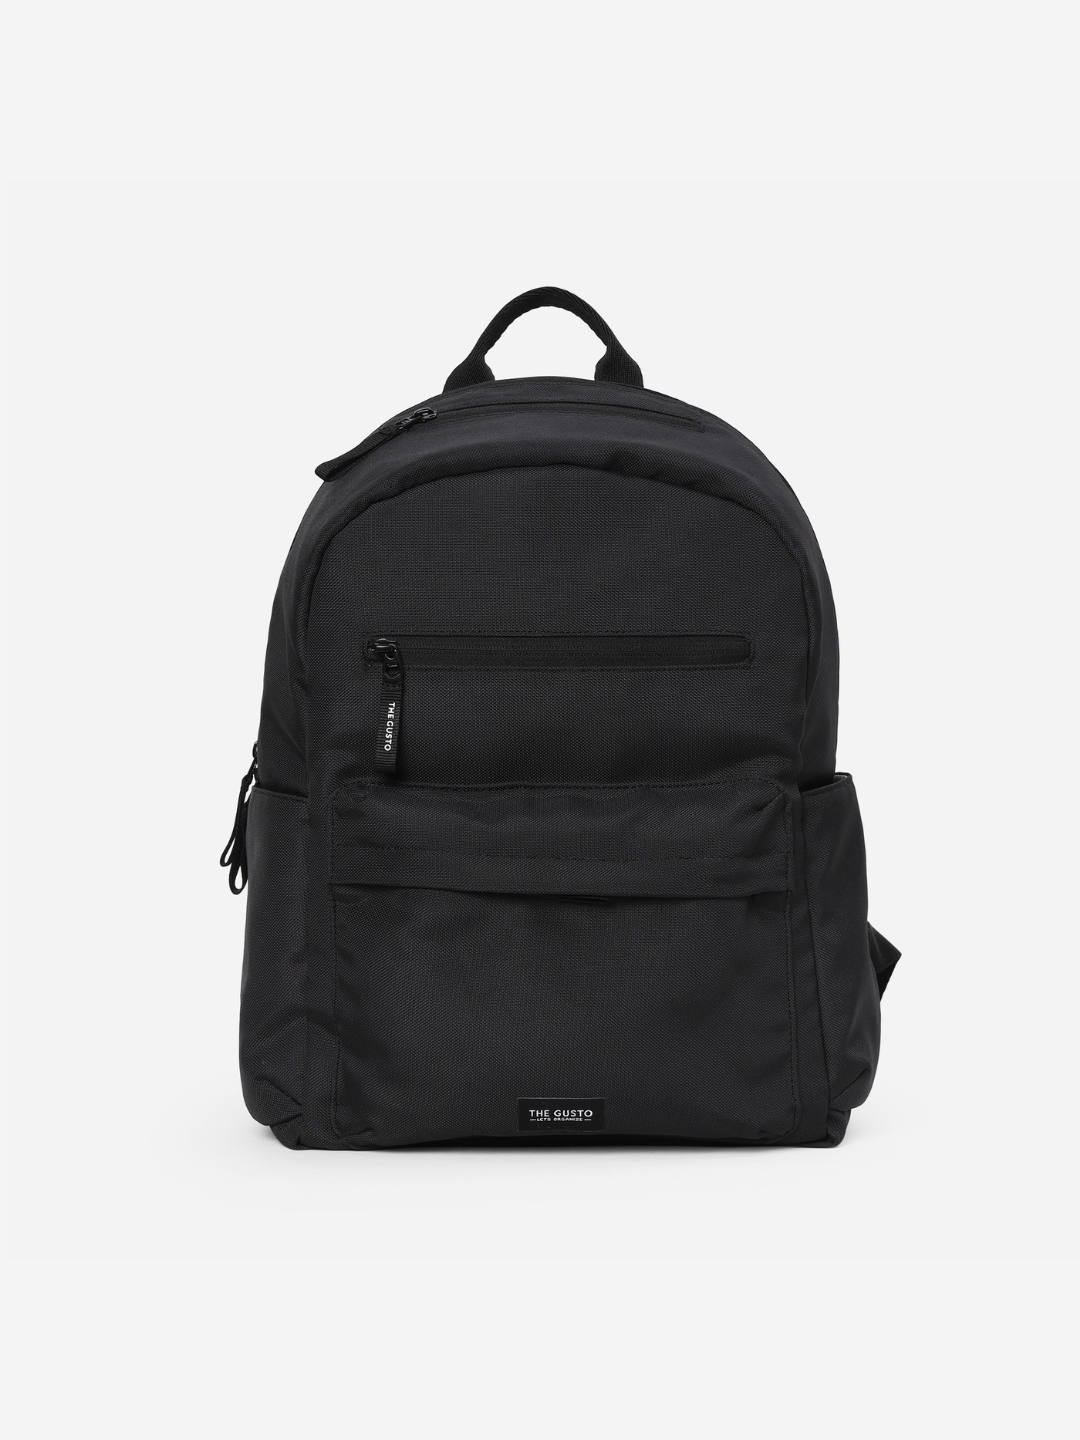 Buy Voyager Backpack Online - Black | The Gusto